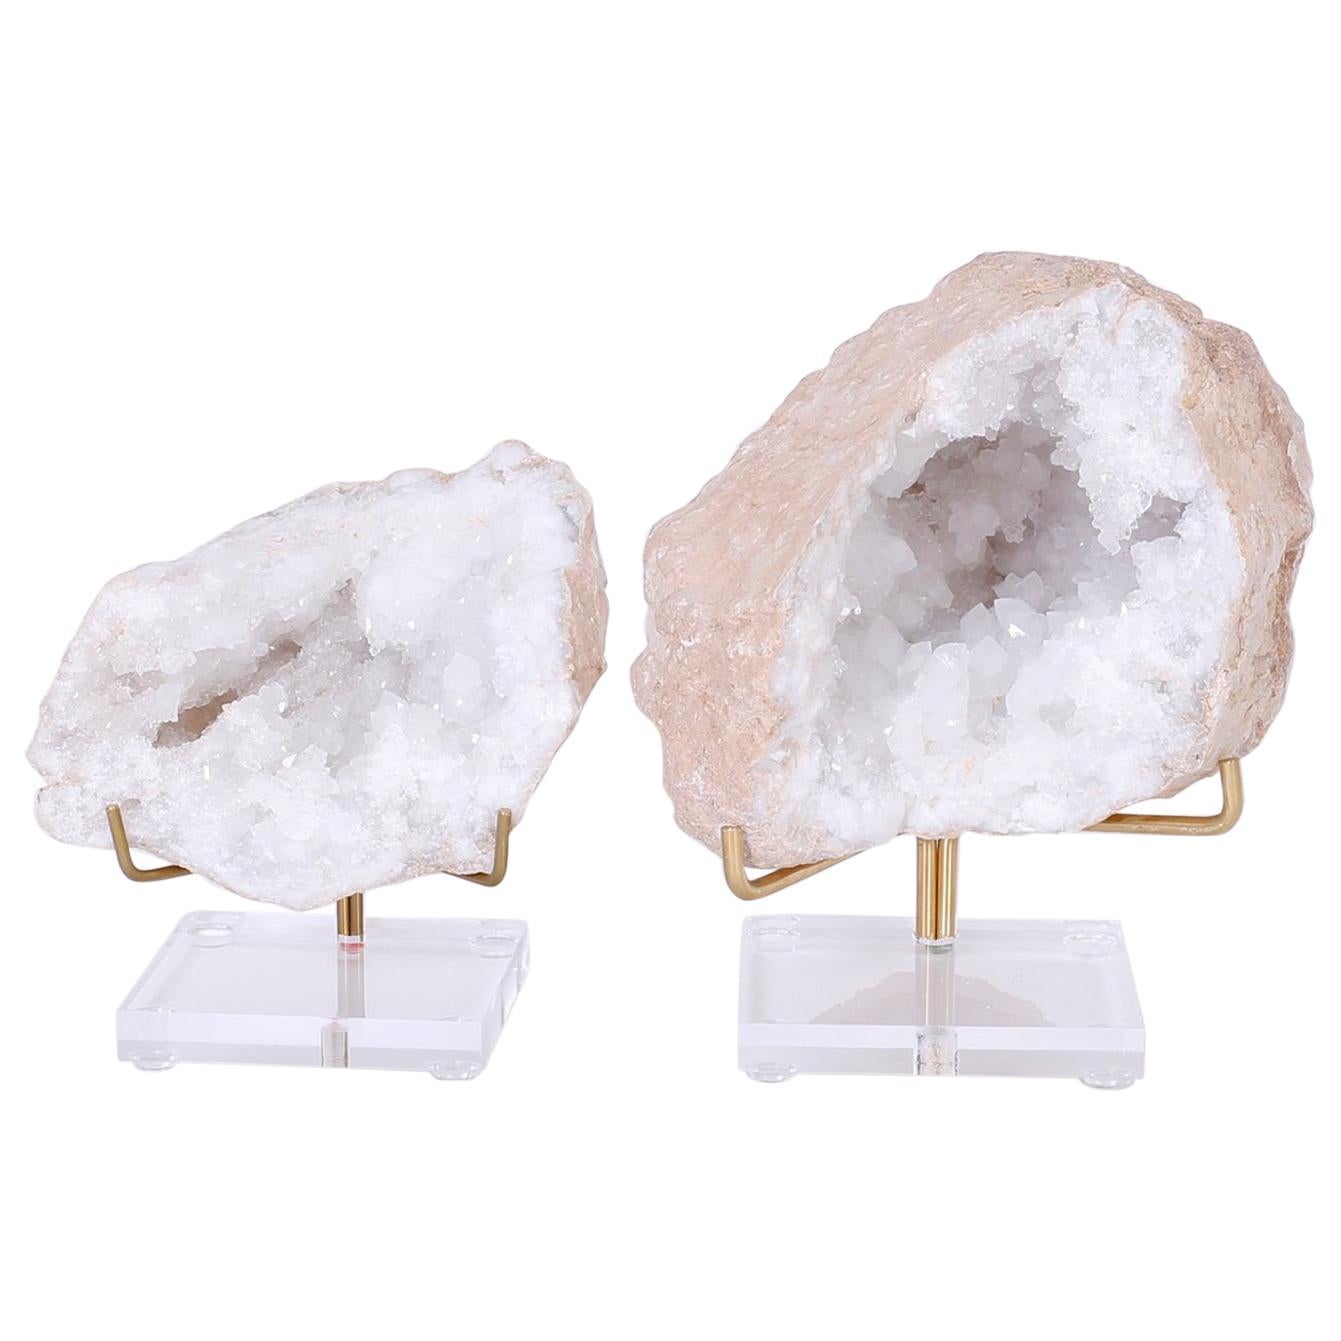 Two Quartz Geode Specimens, Priced Individually